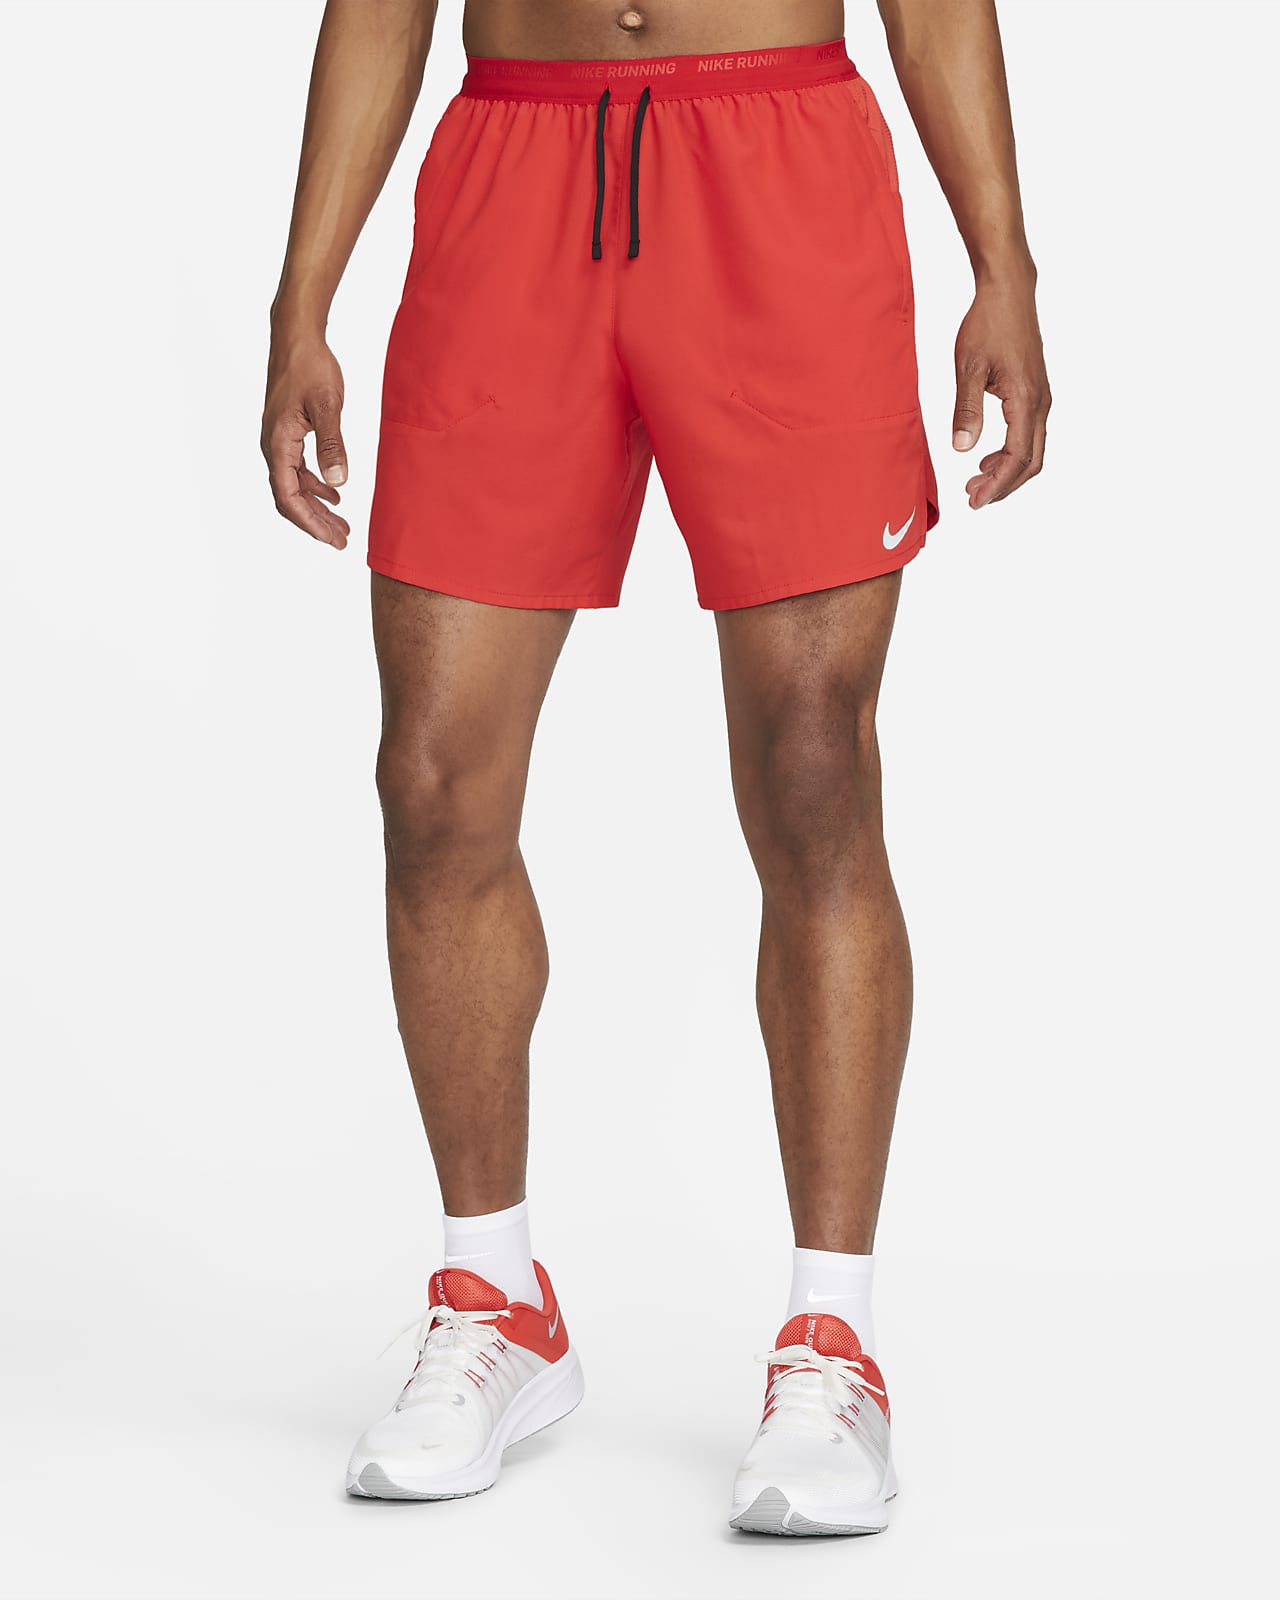 Nike Dri-FIT Stride Men's 7" Unlined Running Shorts